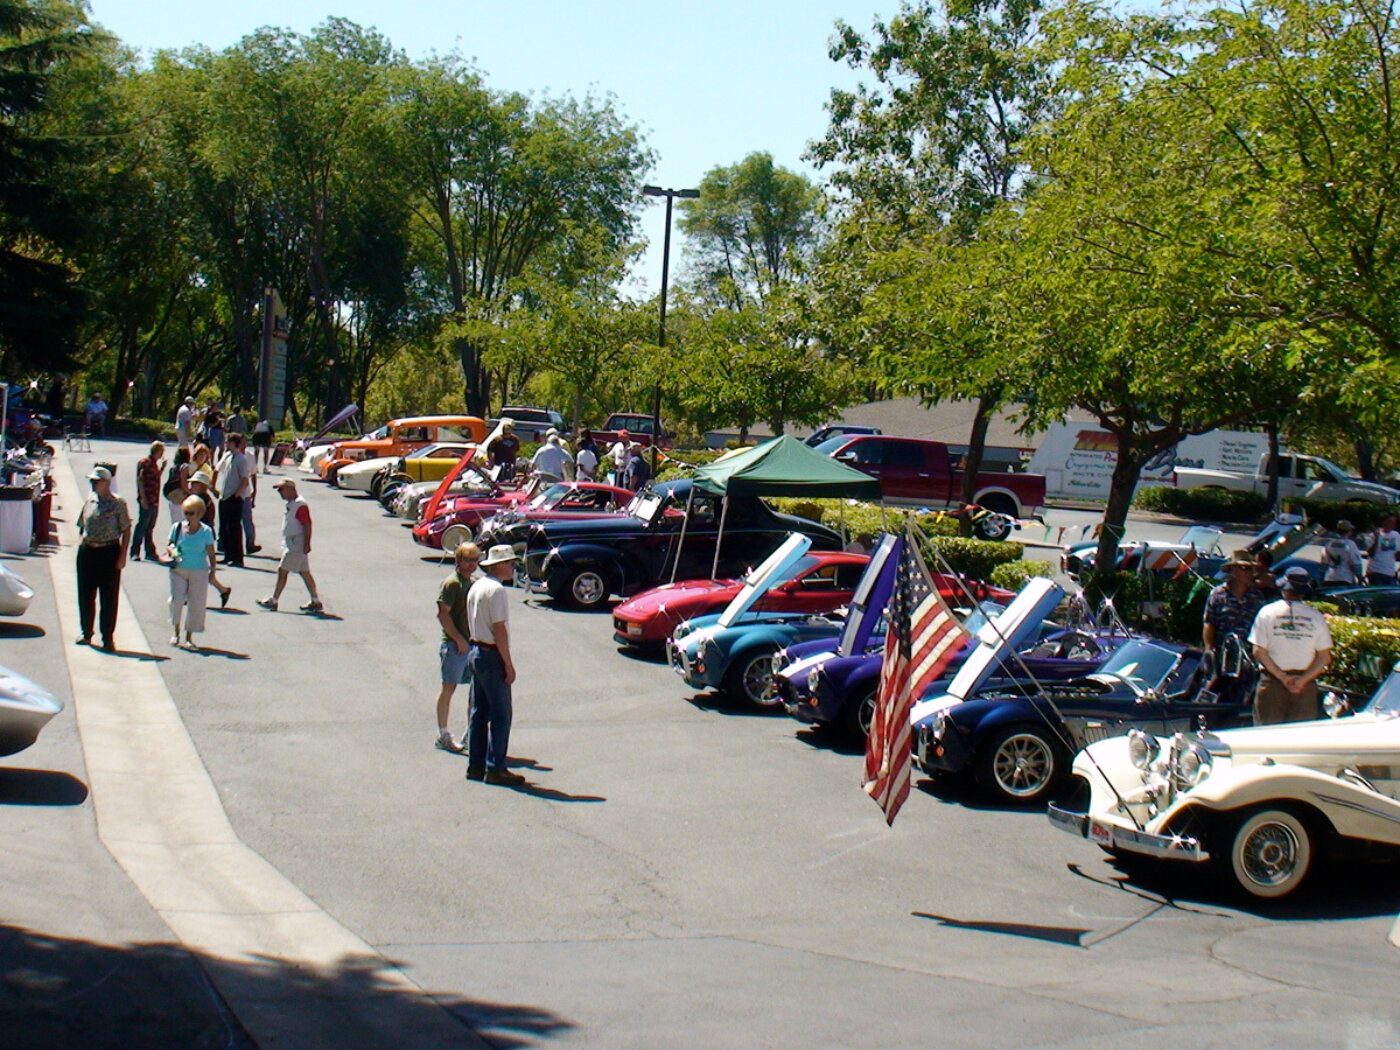 						Northern California Kit Car Show 4
			